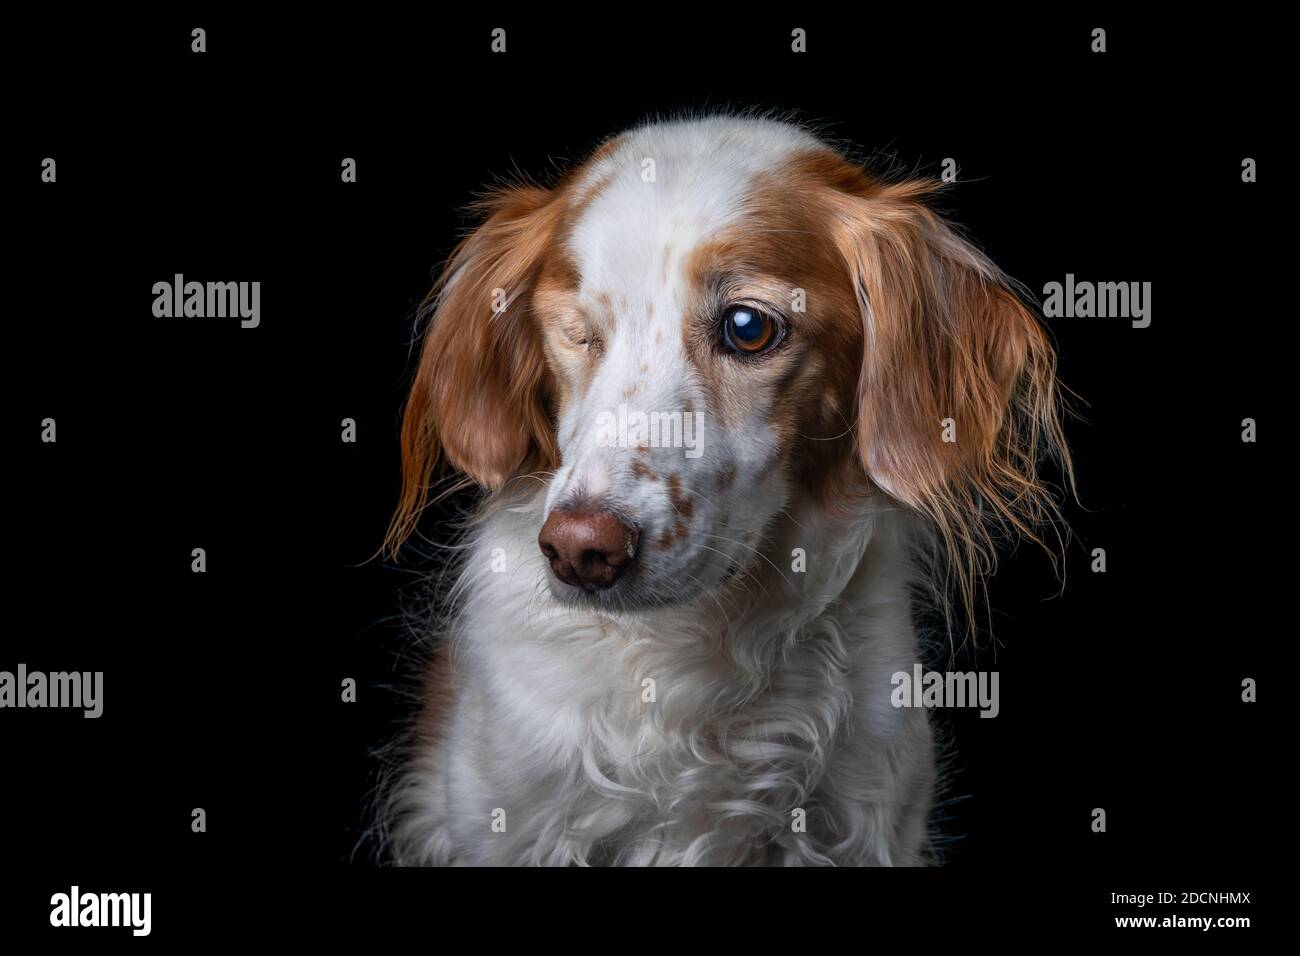 Studio portrait of a one-eyed orange and white Brittany Dog on black background. Stock Photo